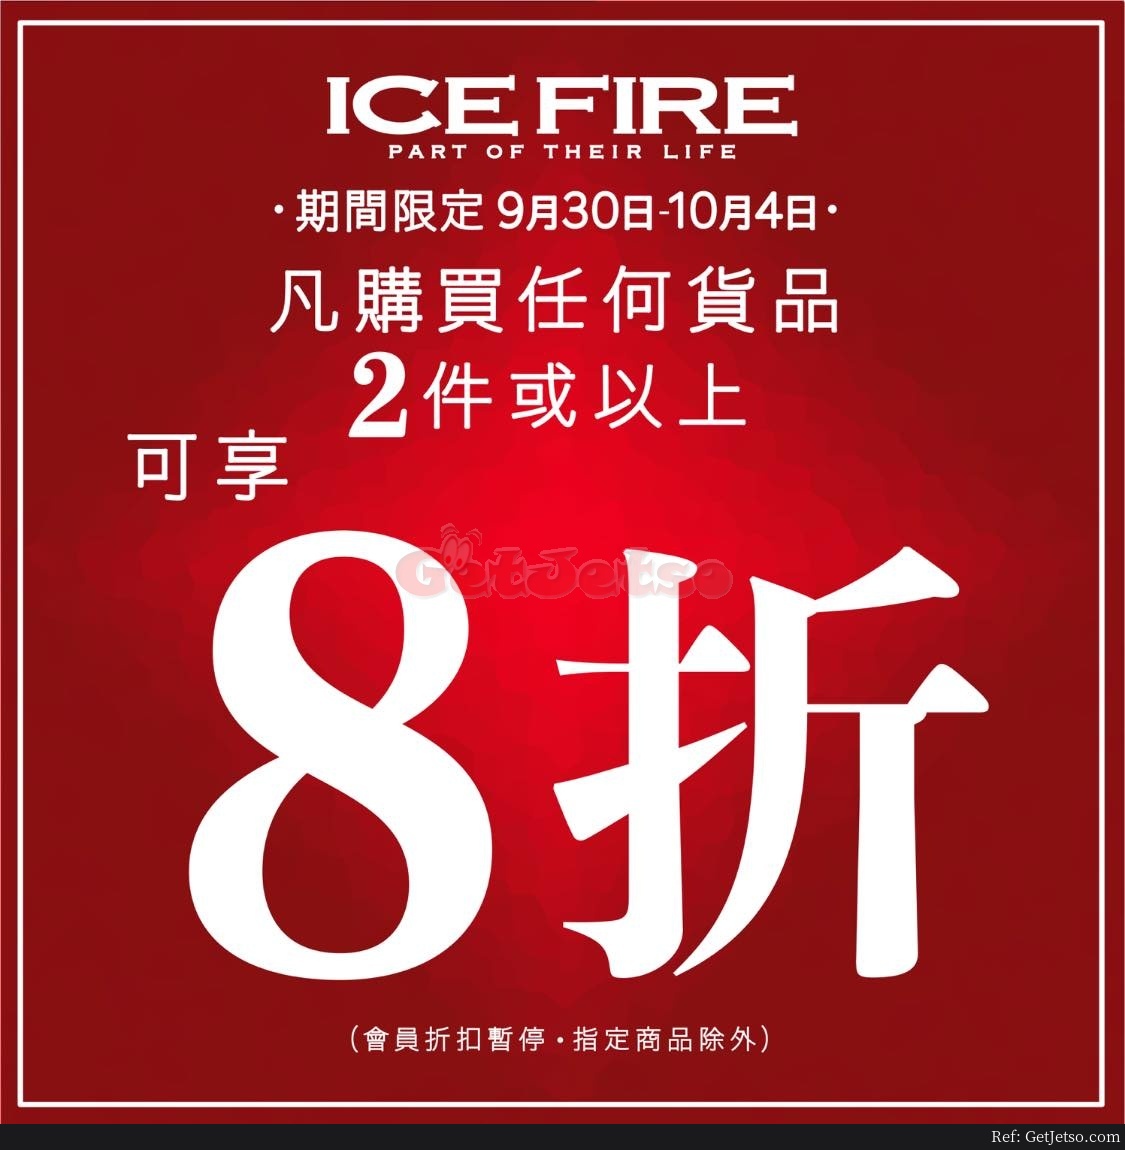 ICE FIRE 低至8折減價優惠(至20年10月4日)圖片1